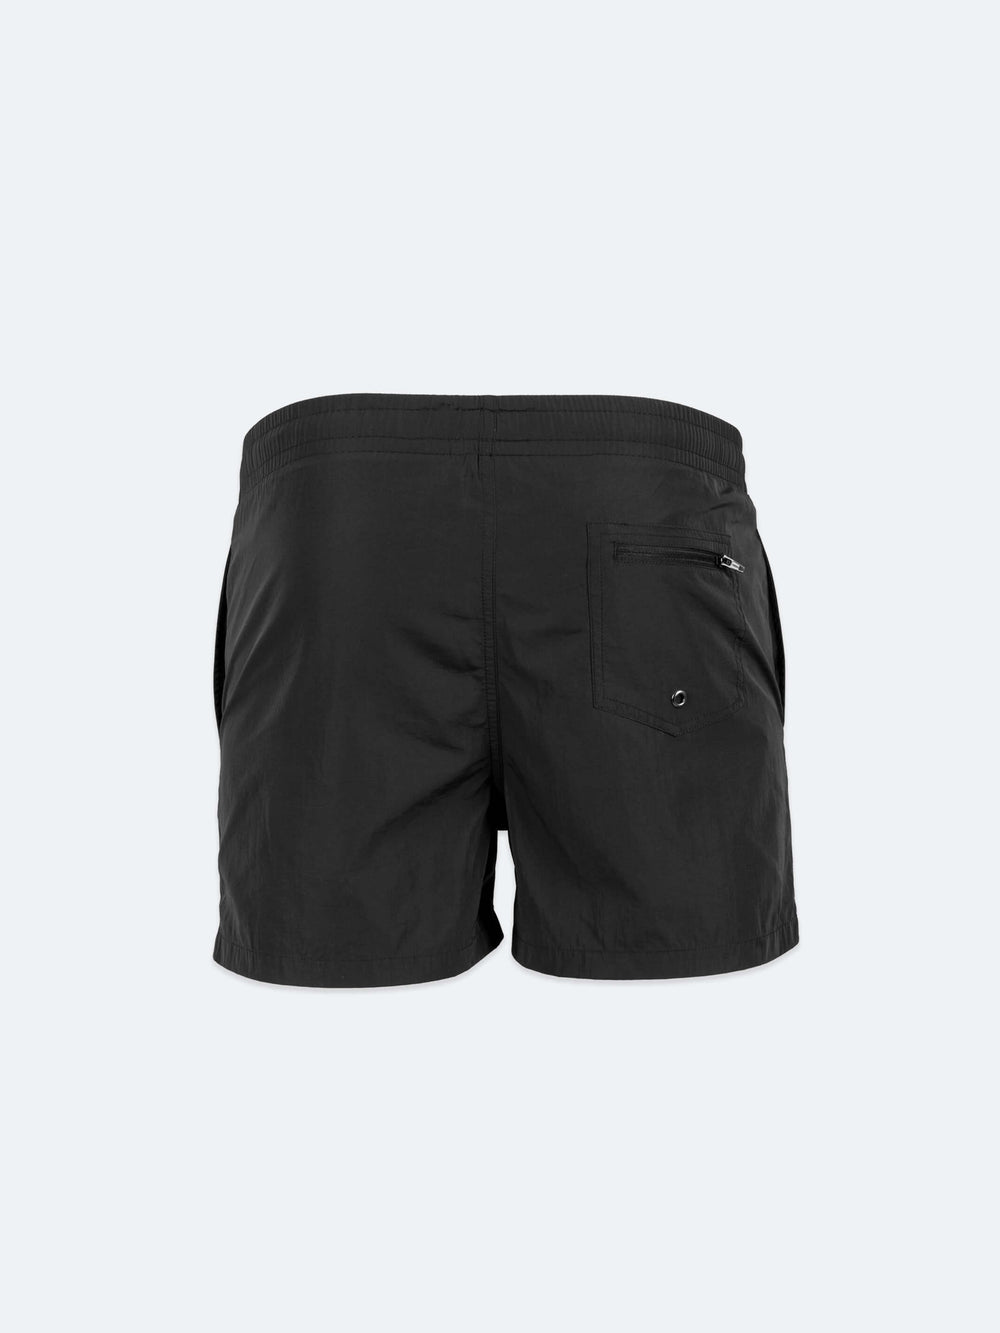 Boxed Swim Shorts (Black)